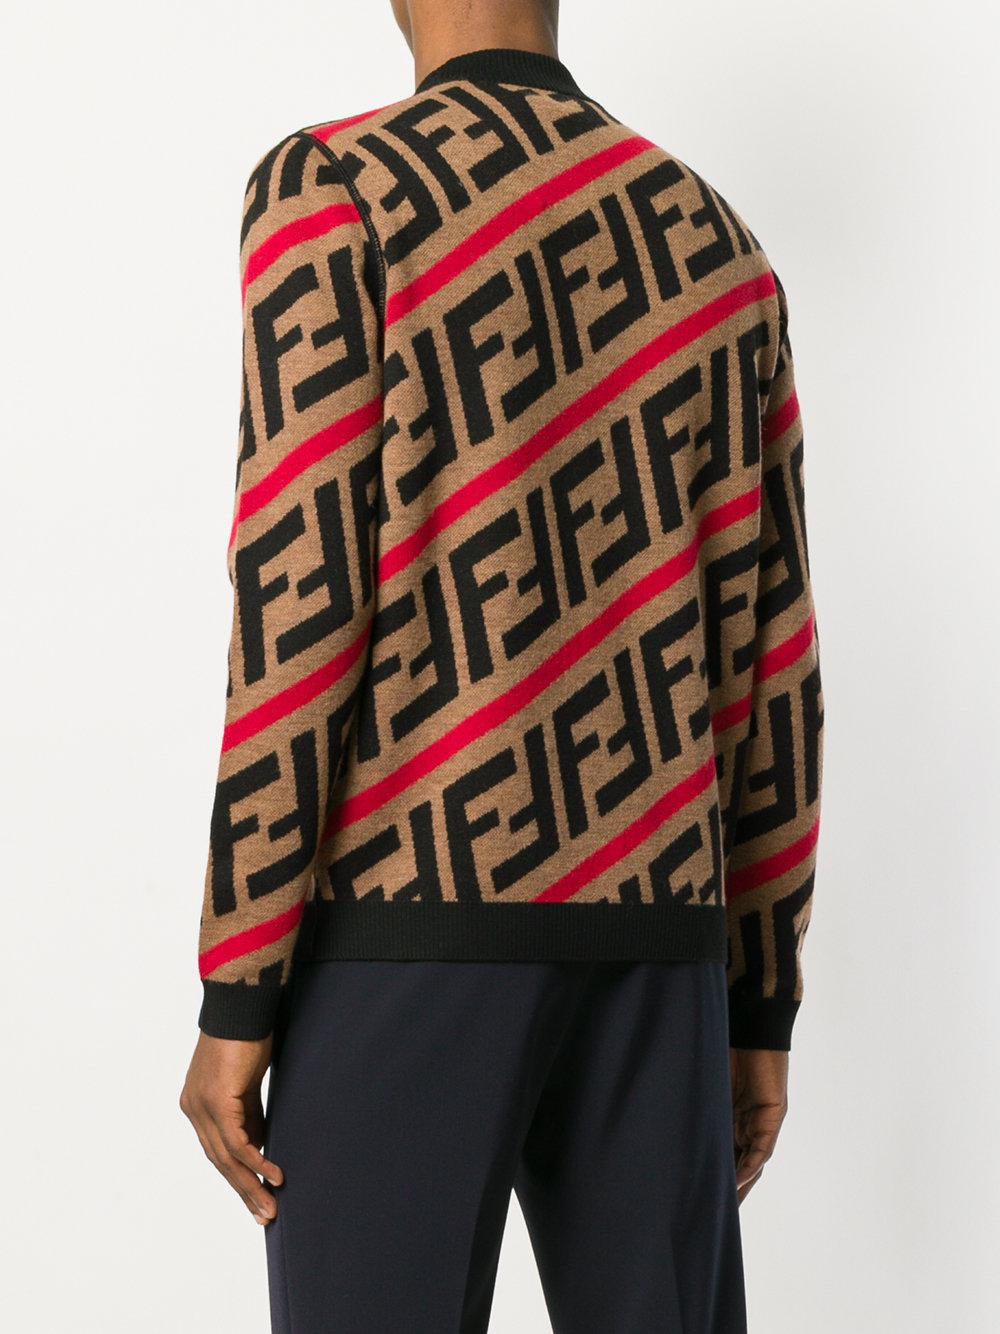 Fendi Ff Logo Sweatshirt Top Sellers, 60% OFF | www.ingeniovirtual.com